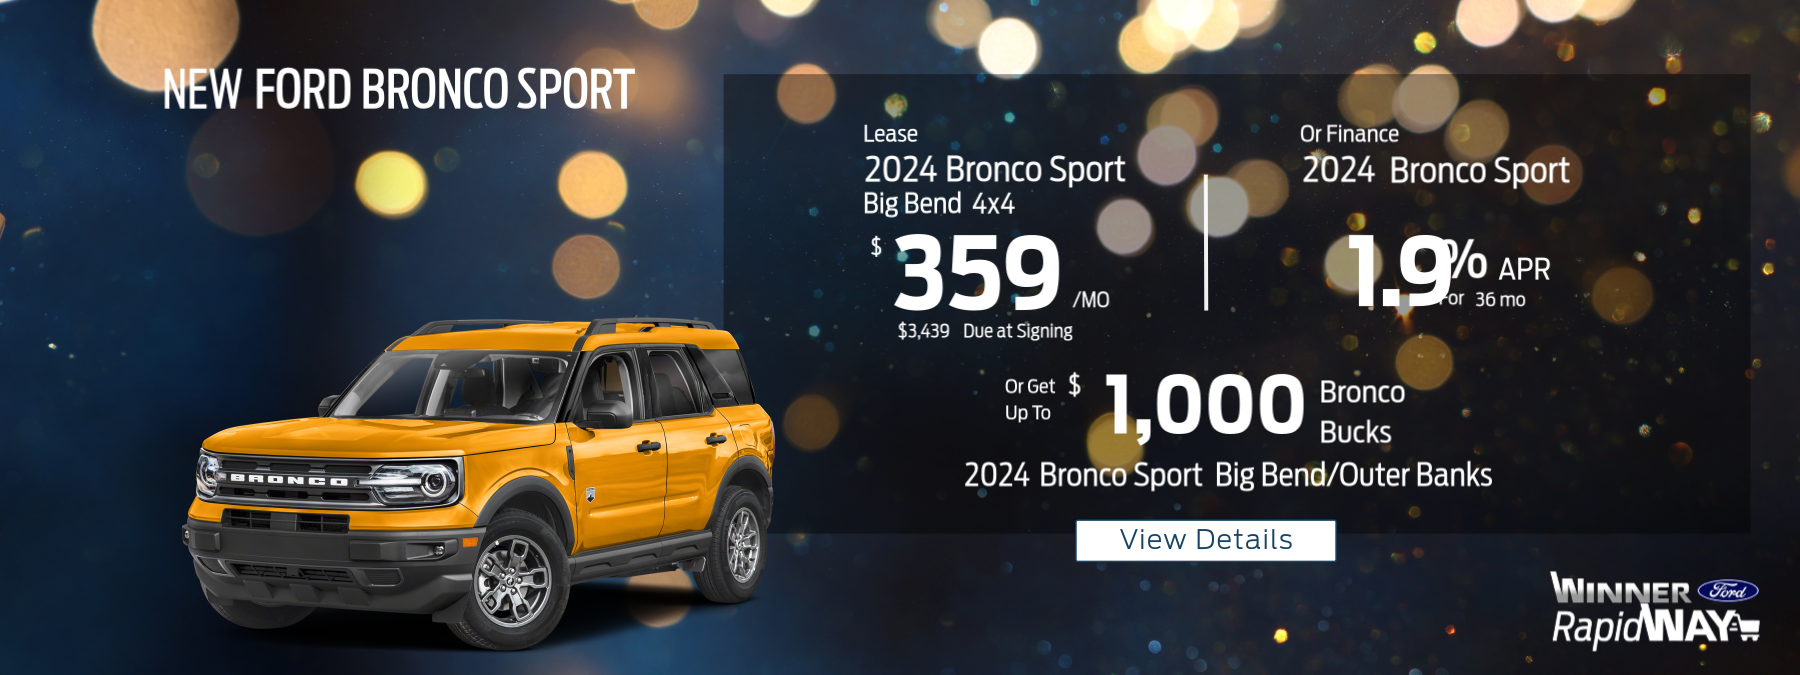 Ford Bronco Sport Specials